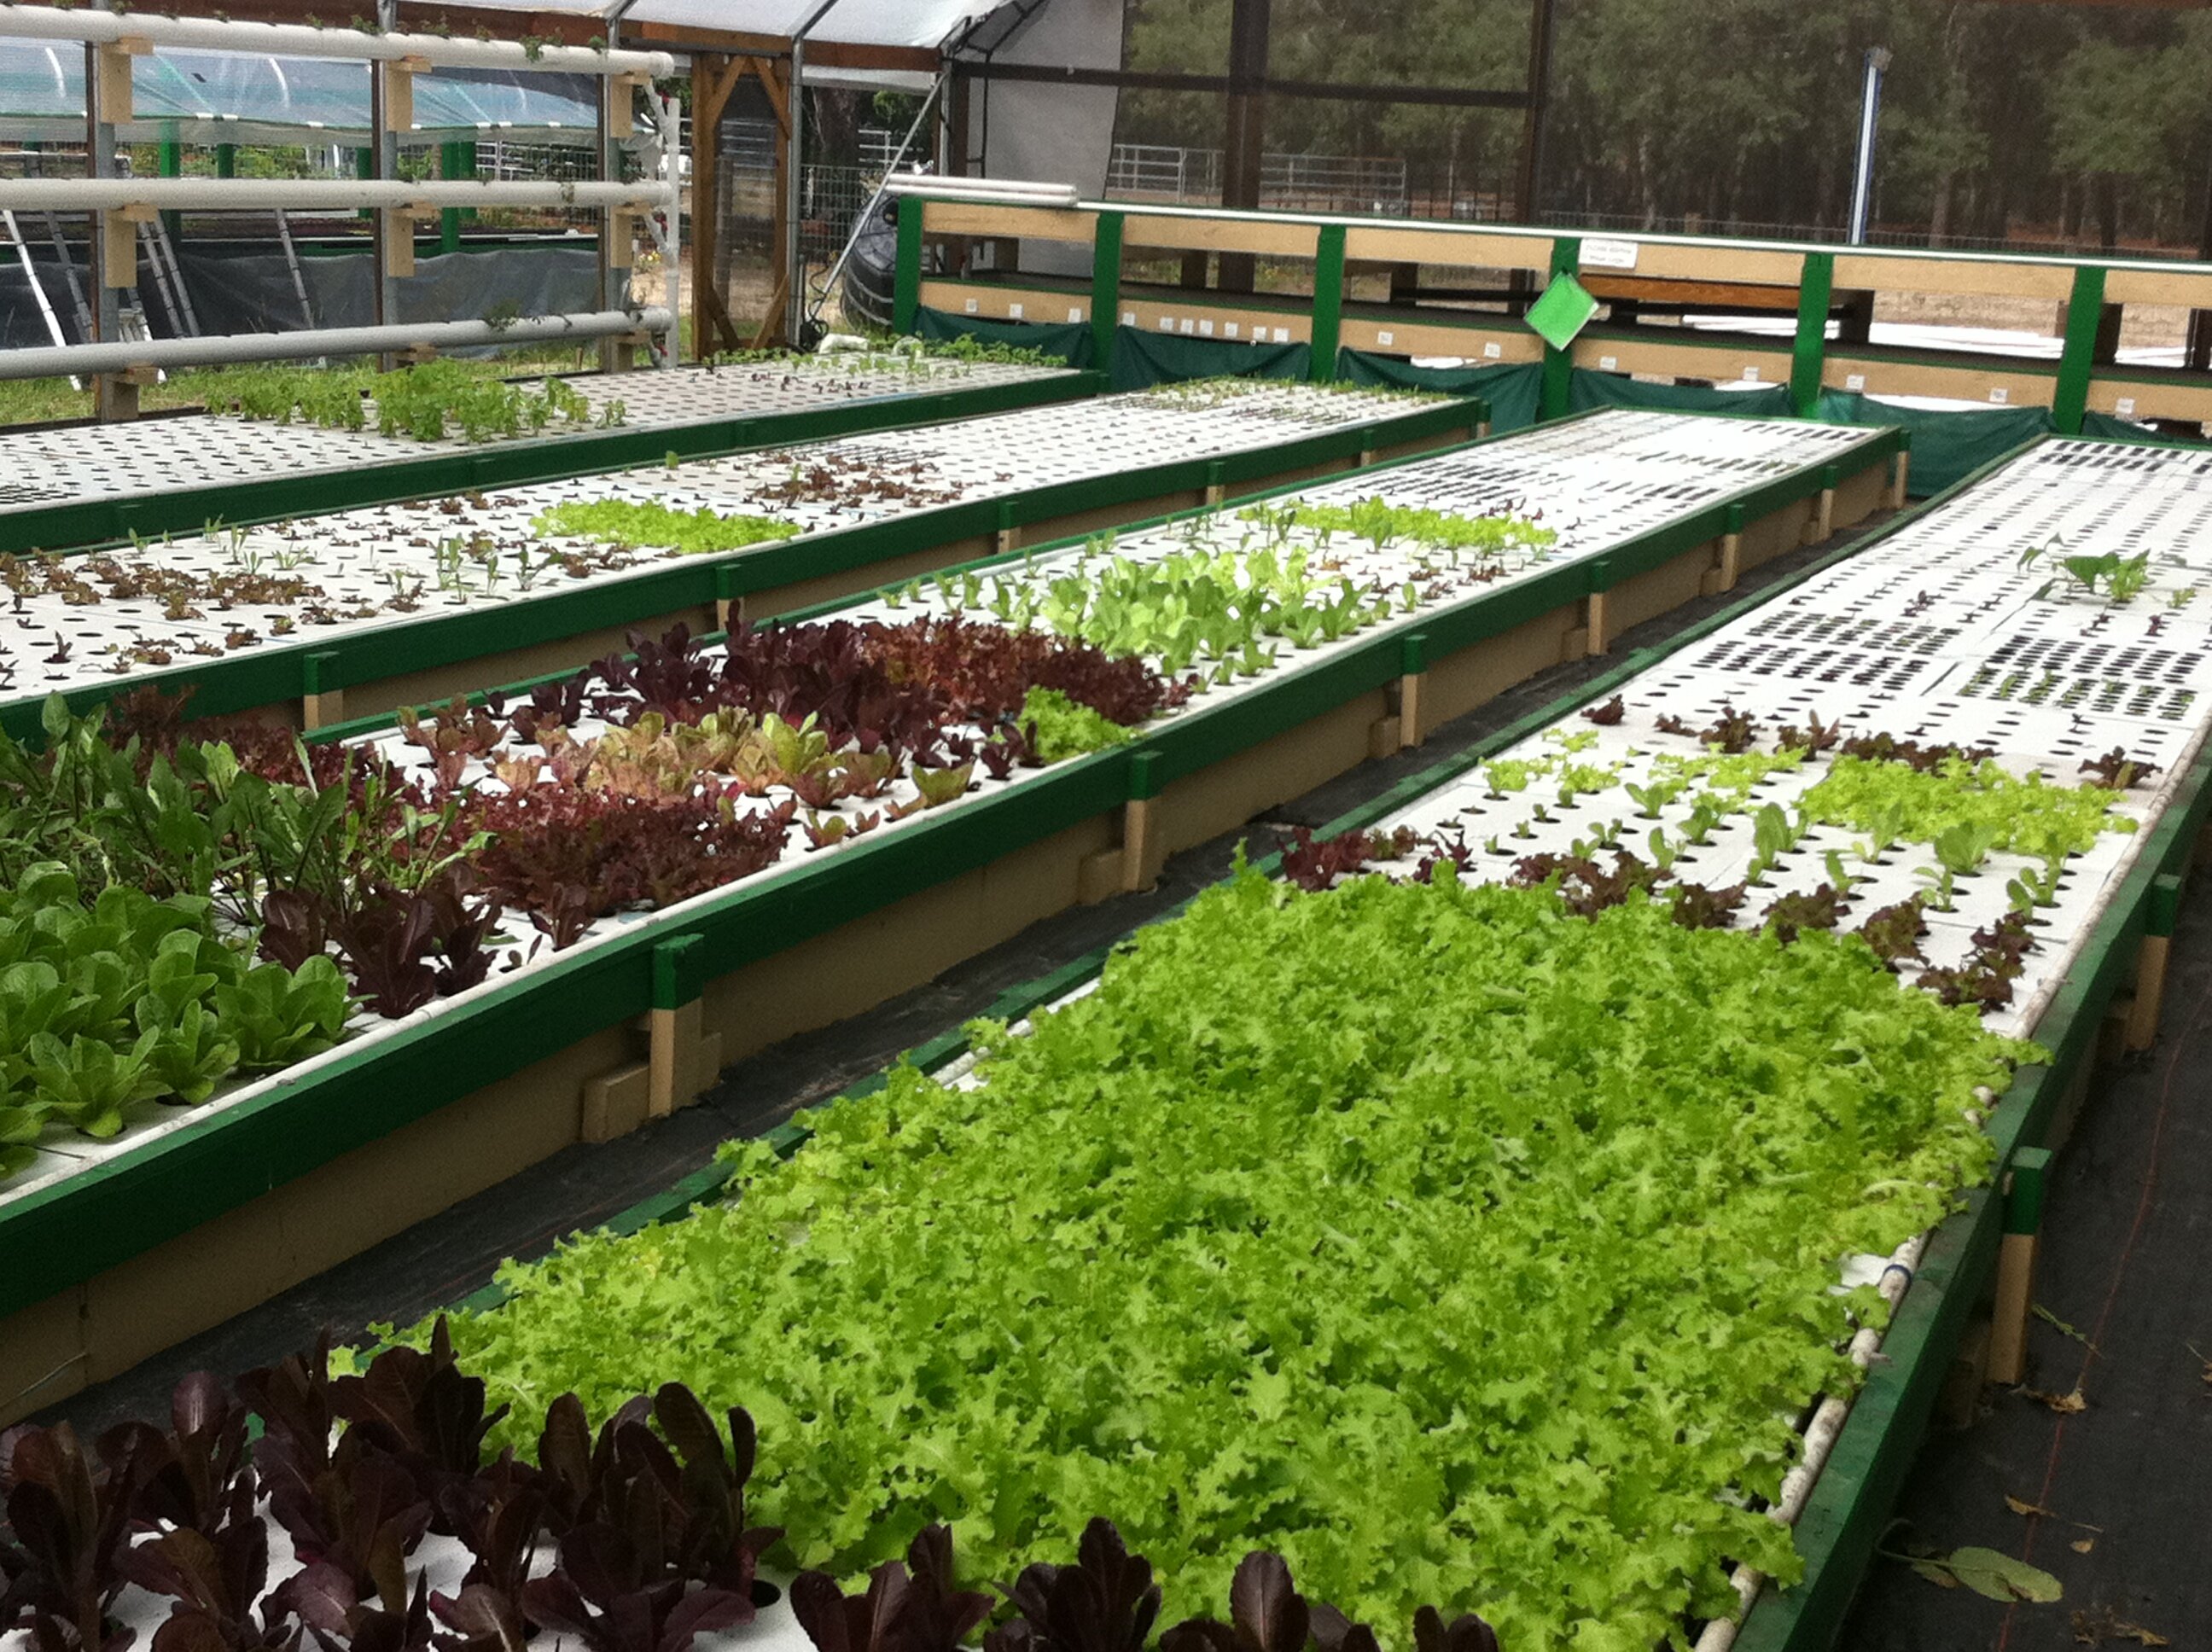 Commercial Aquaponic : City-dwelling Vegetable Farming While Utilizing ...